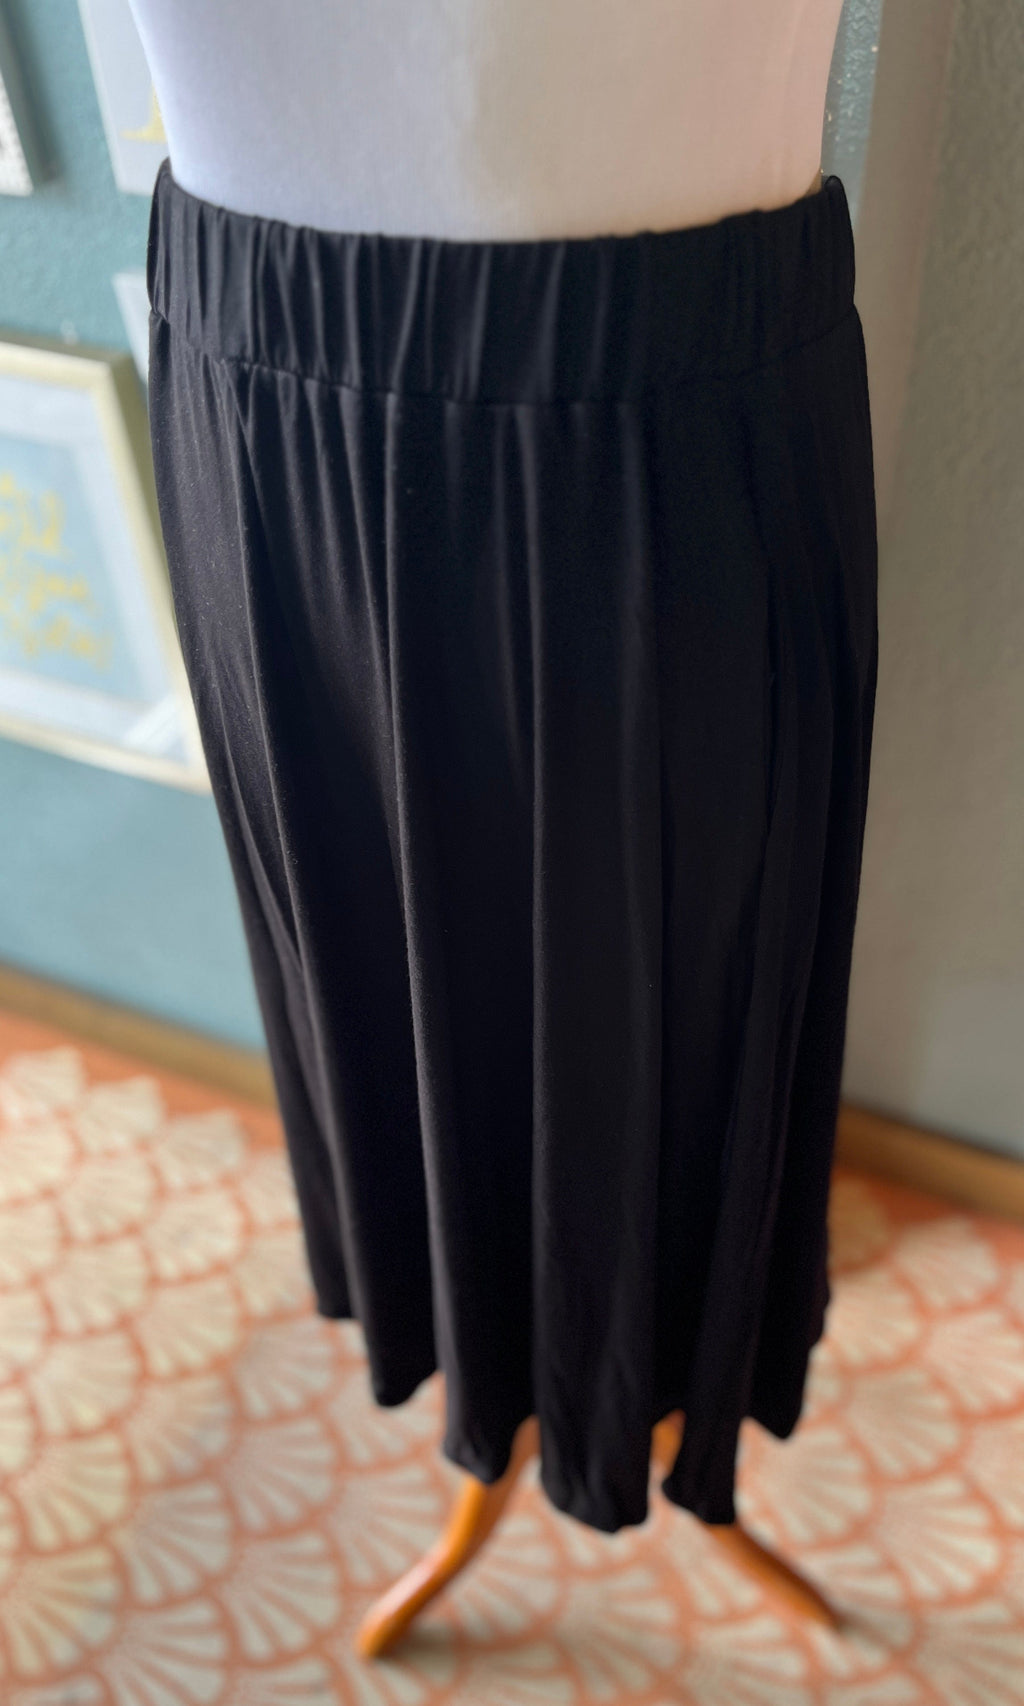 Heimish U.S.A Black Skirt with Pockets